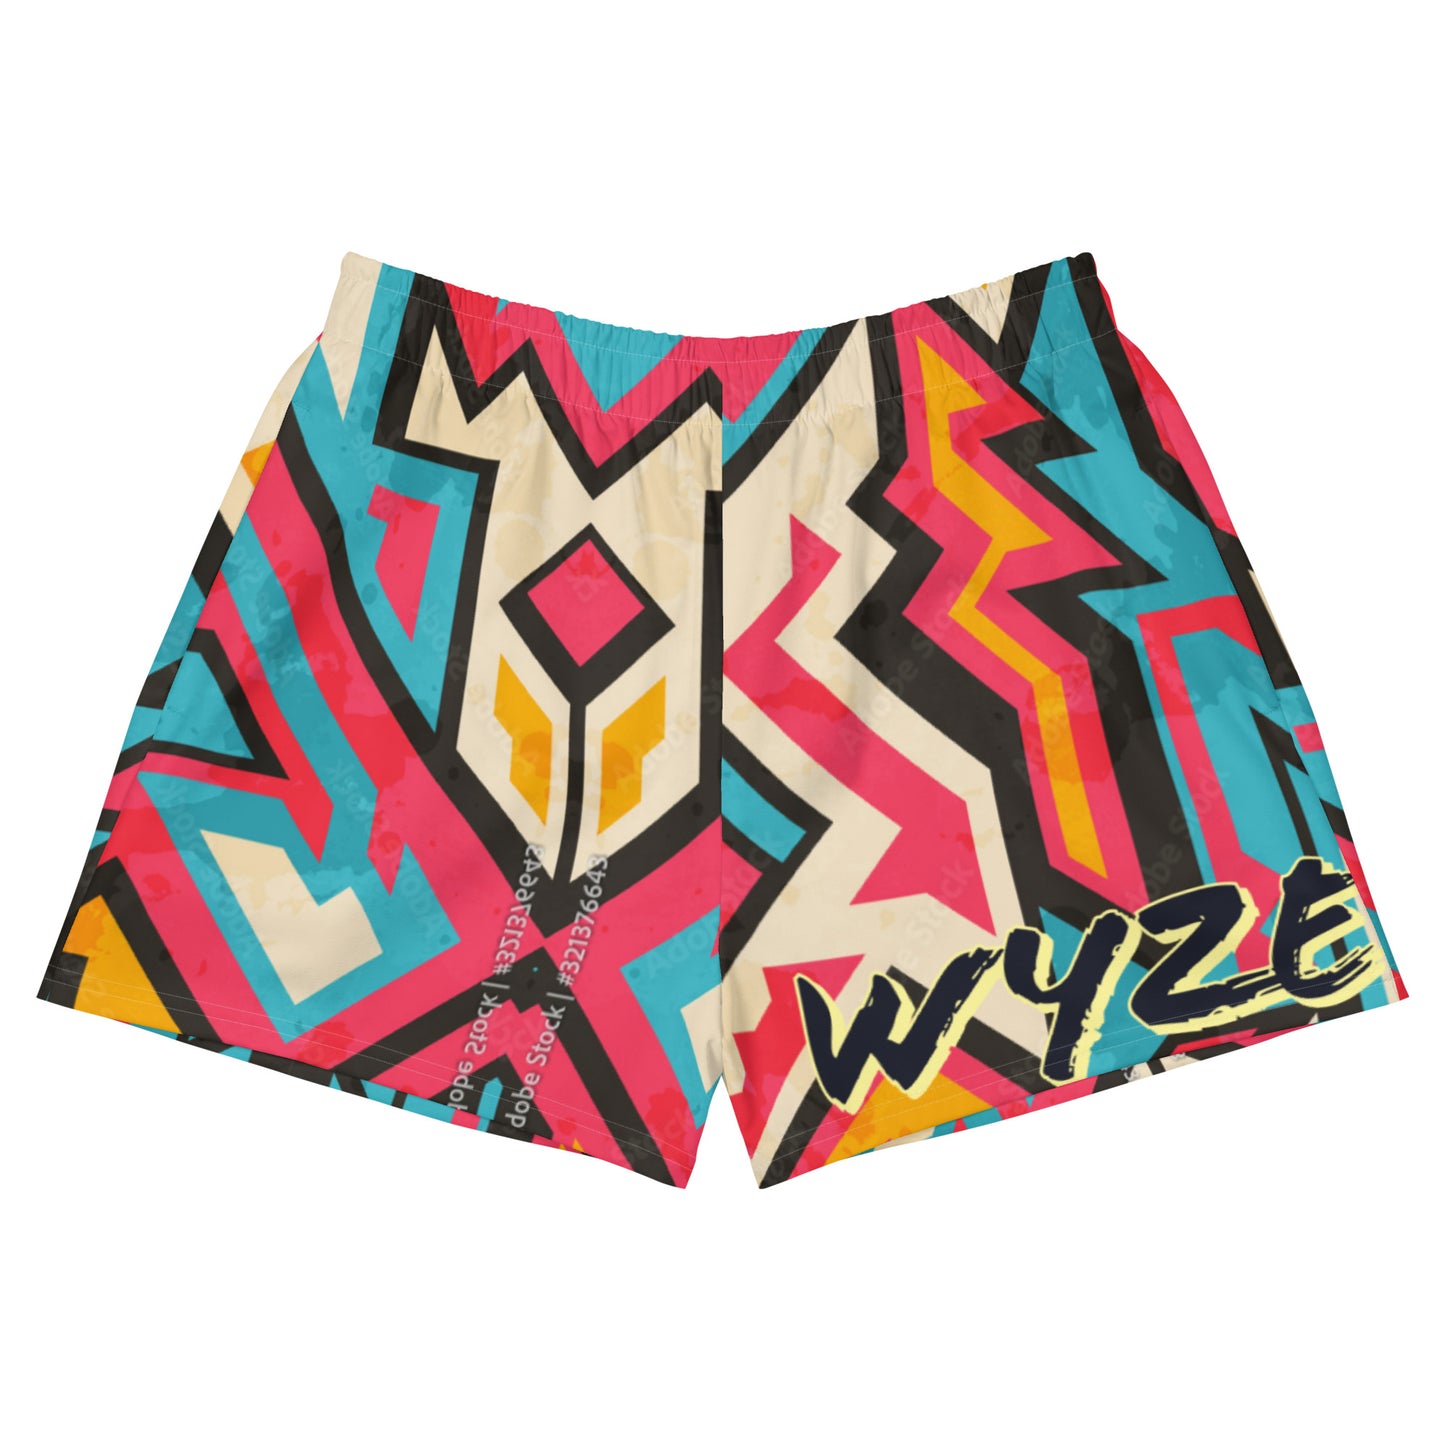 Aztec Women’s Athletic Shorts